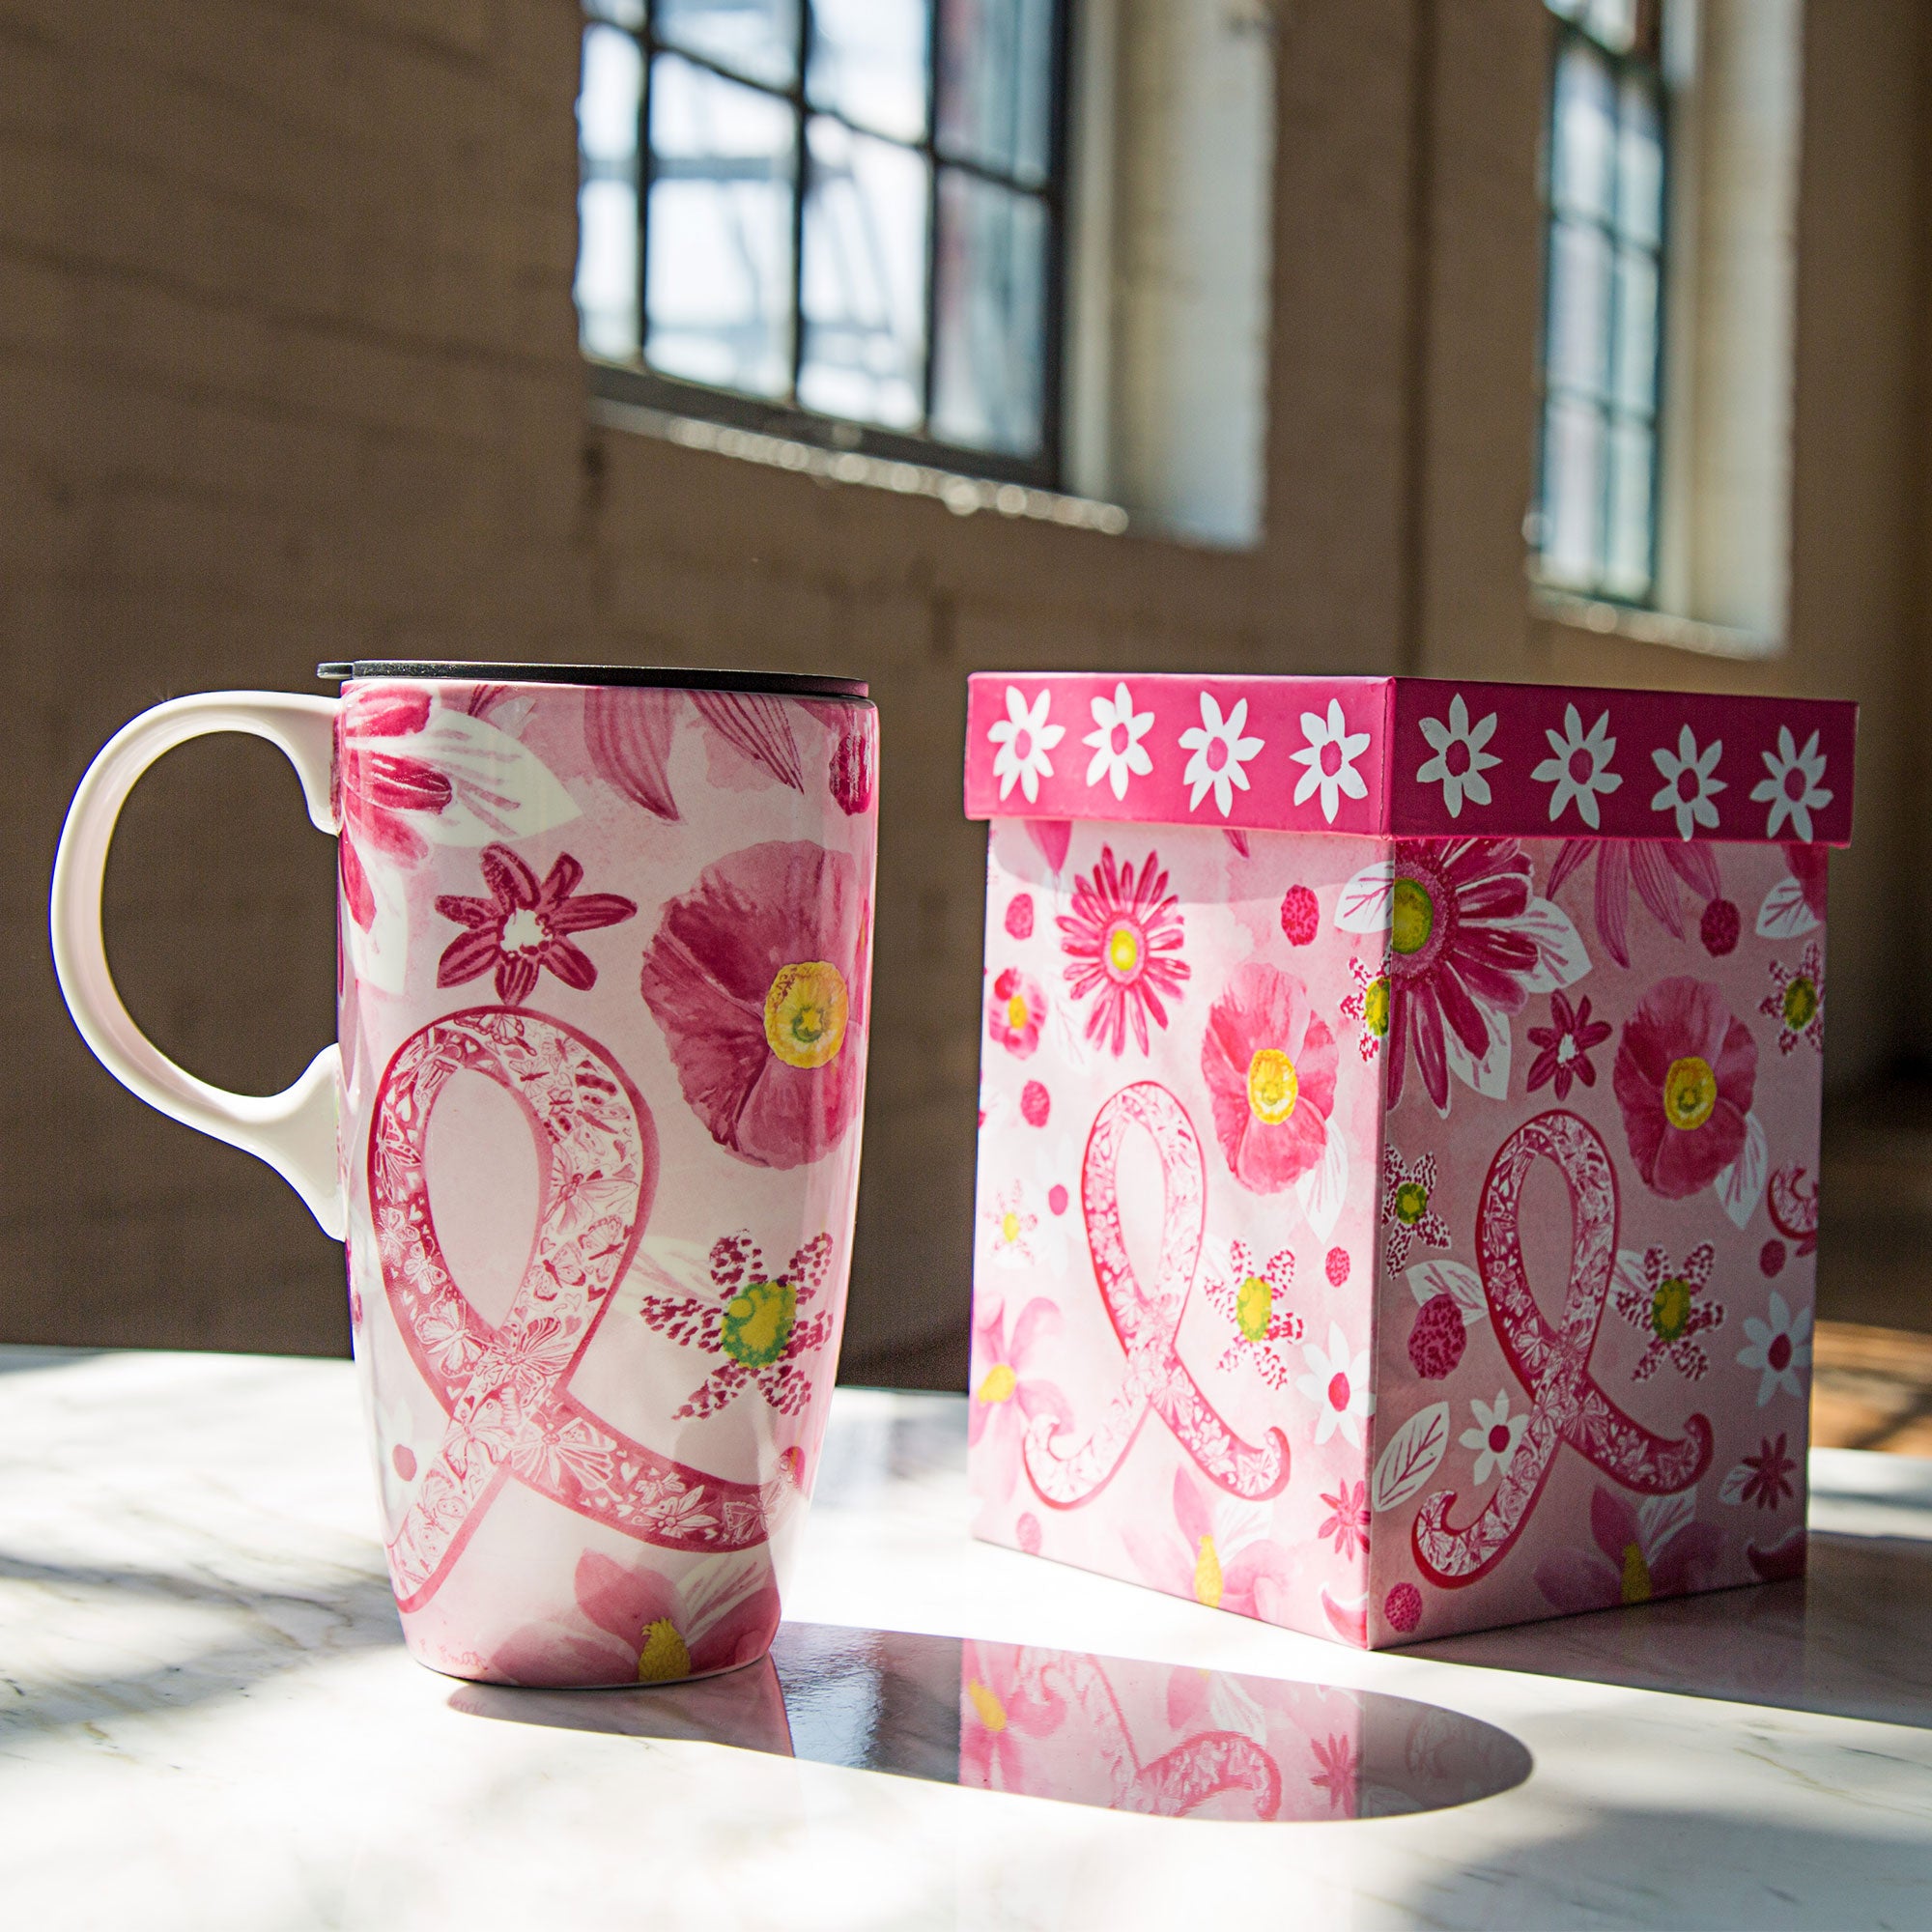 Inspirational Ceramic Travel Coffee Mug , Matching Gift Box - Sloth Spirit Animal